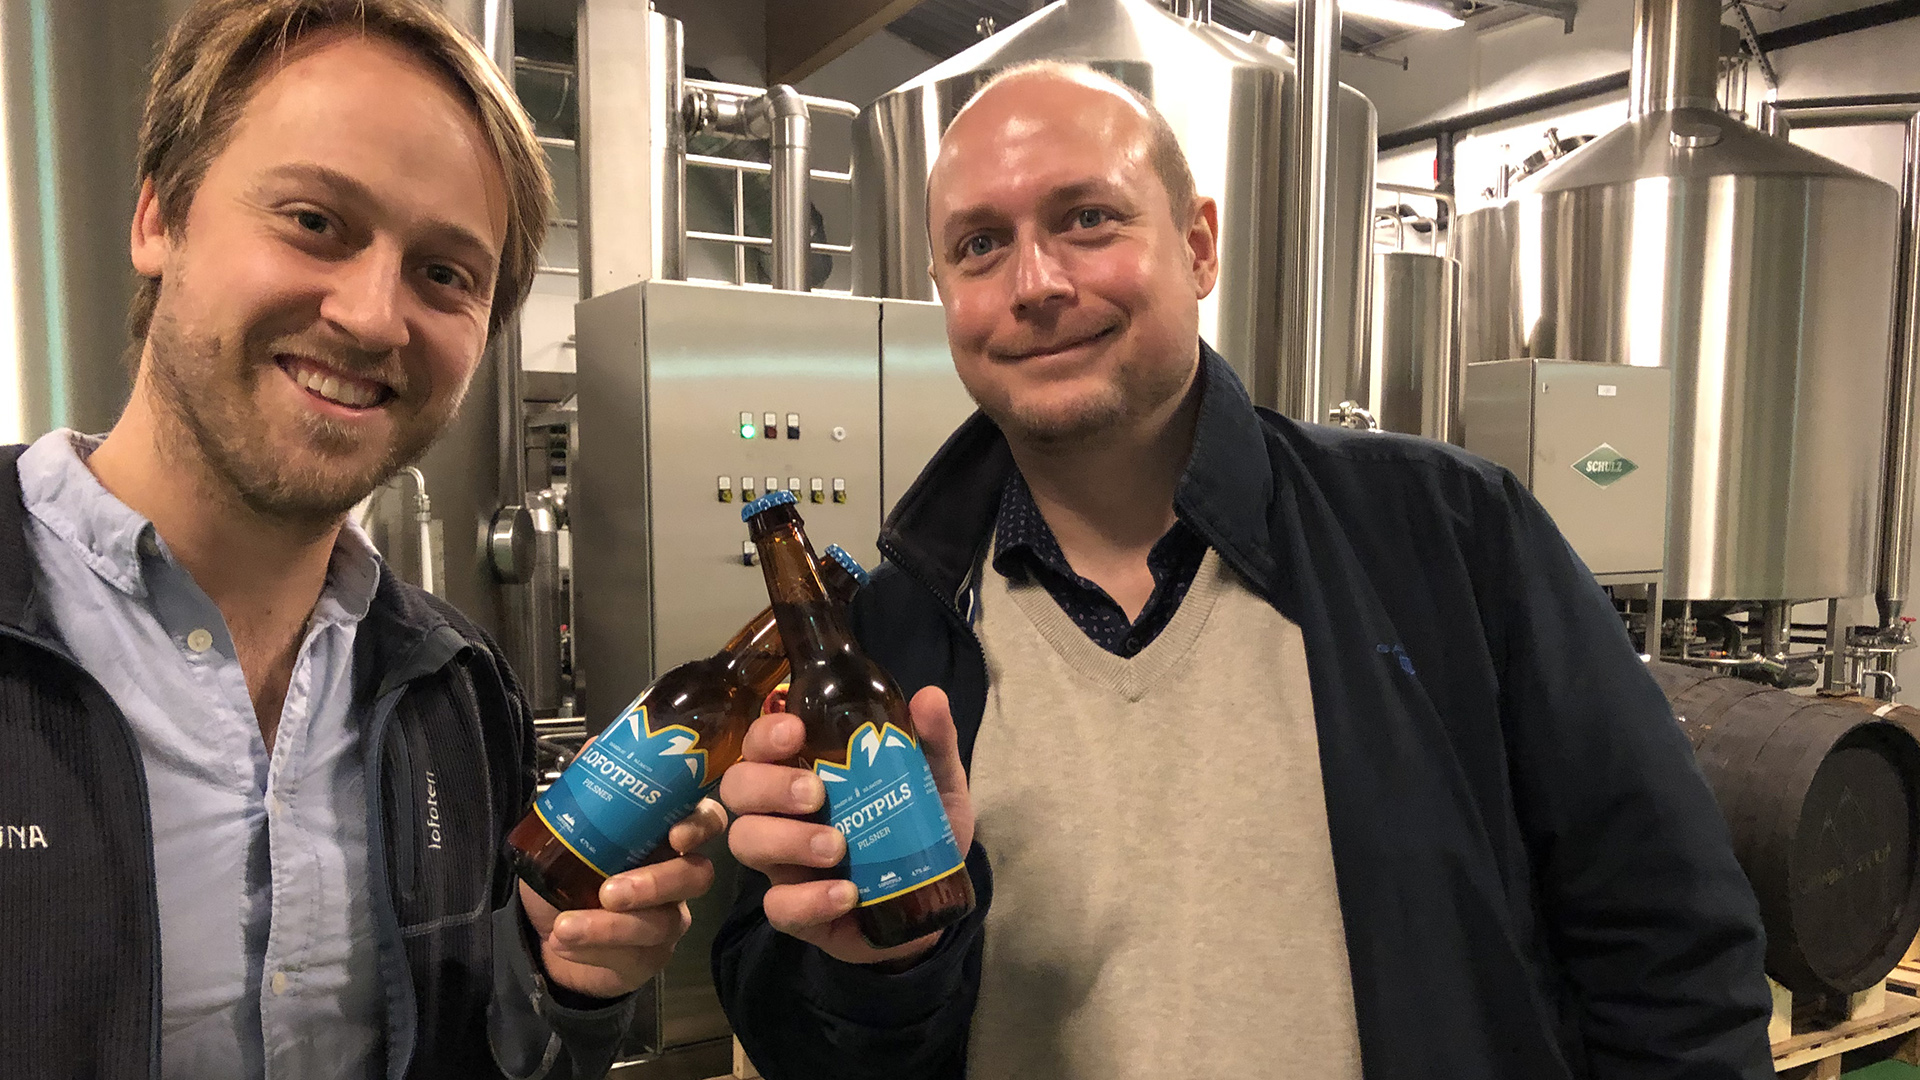 men-holding-craft-beer-bottles.jpg